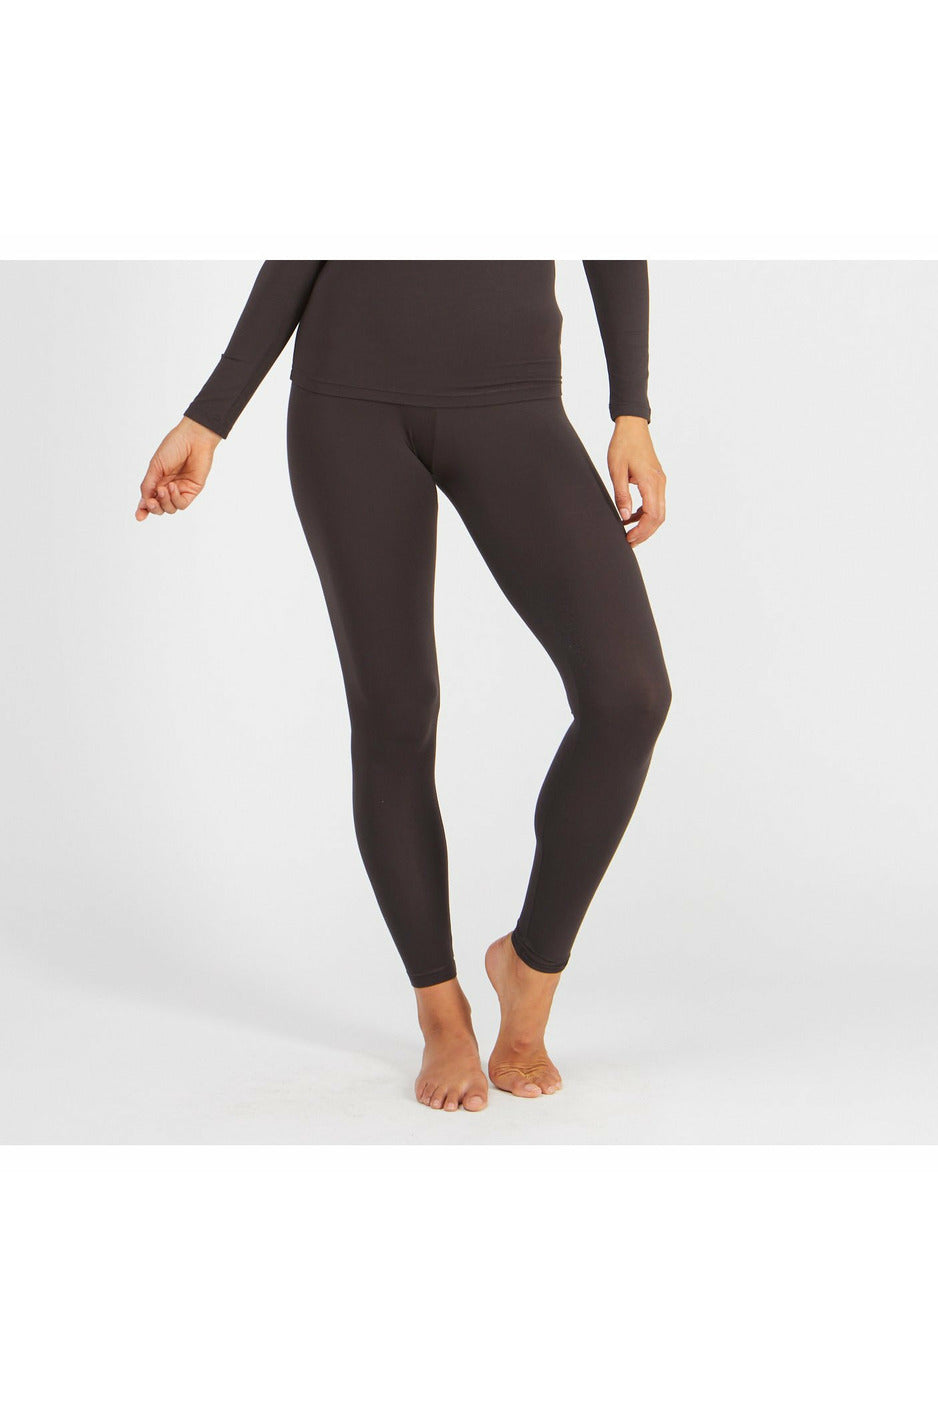 Mesh Panel Pocket Legging - Grey | Hash Tag Australia | Be Activewear